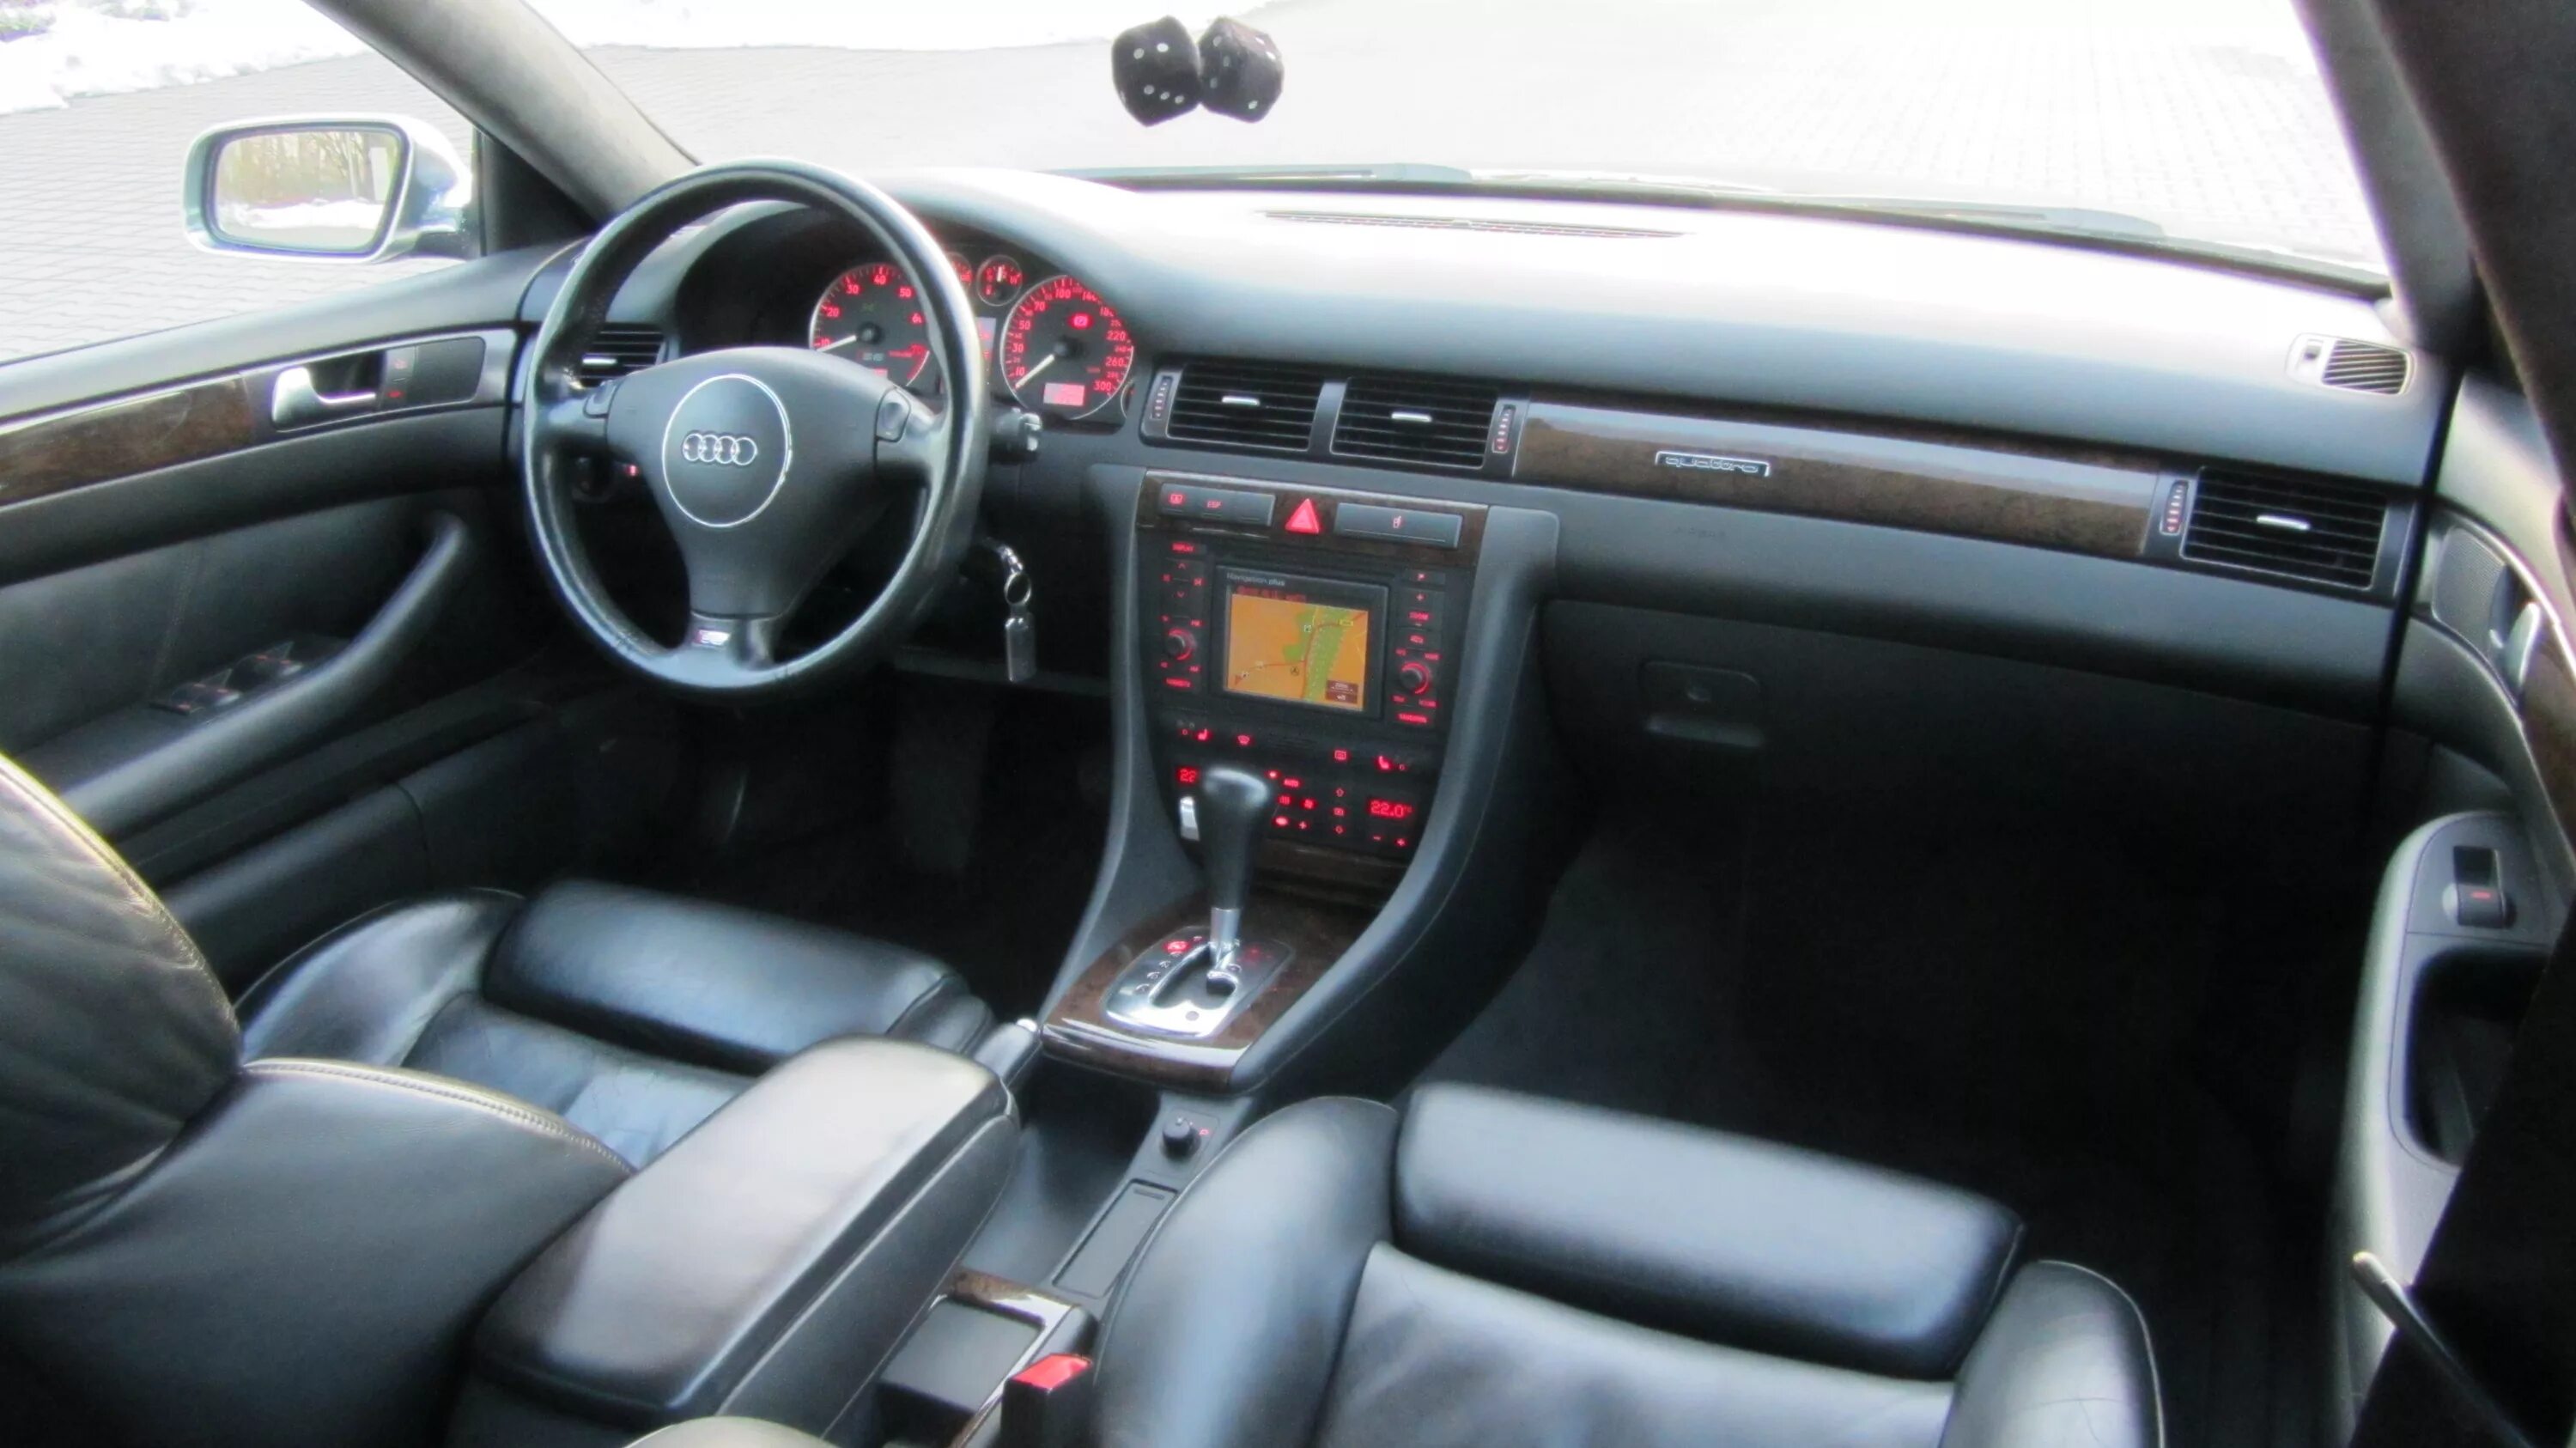 A6 c4 купить. Audi a6 c5 салон. Ауди а6 с5 салон. Audi a4 b5 1997 Interior. Audi s4 b5 Interior.